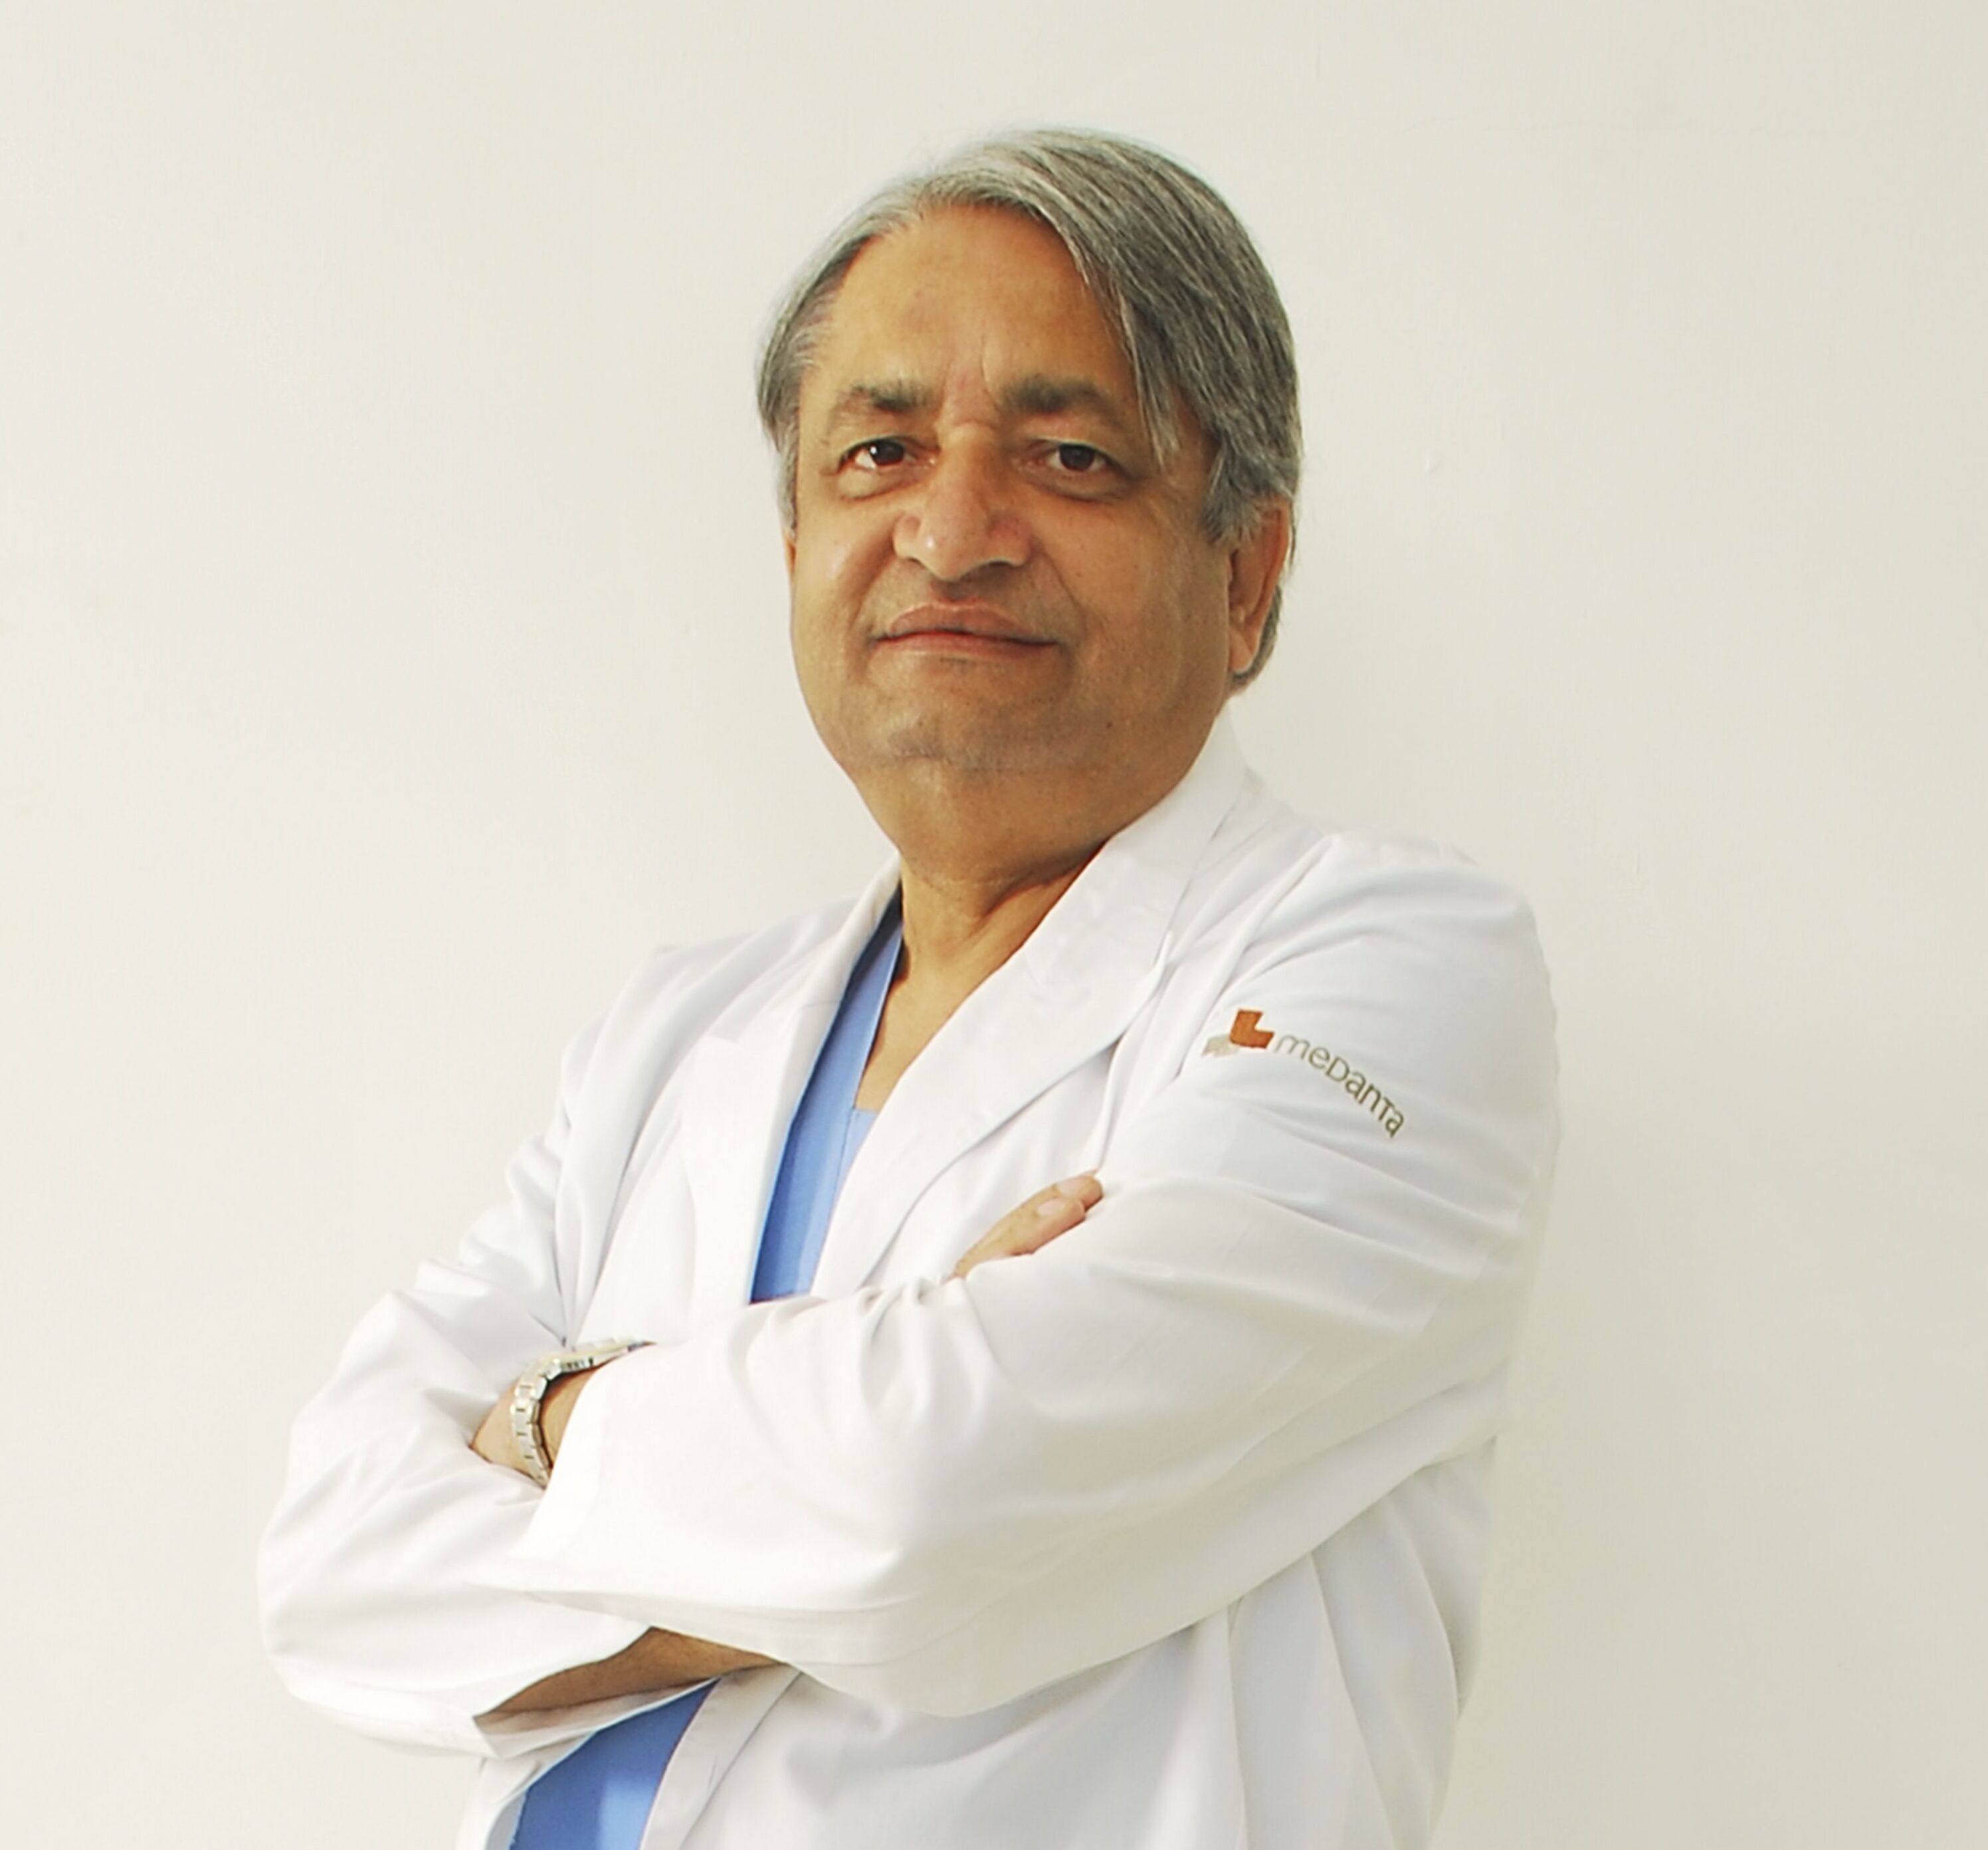 проконсультируйтесь д-р Ajaya Nand jha лучший нейрохирург Меданта gurgaon дели